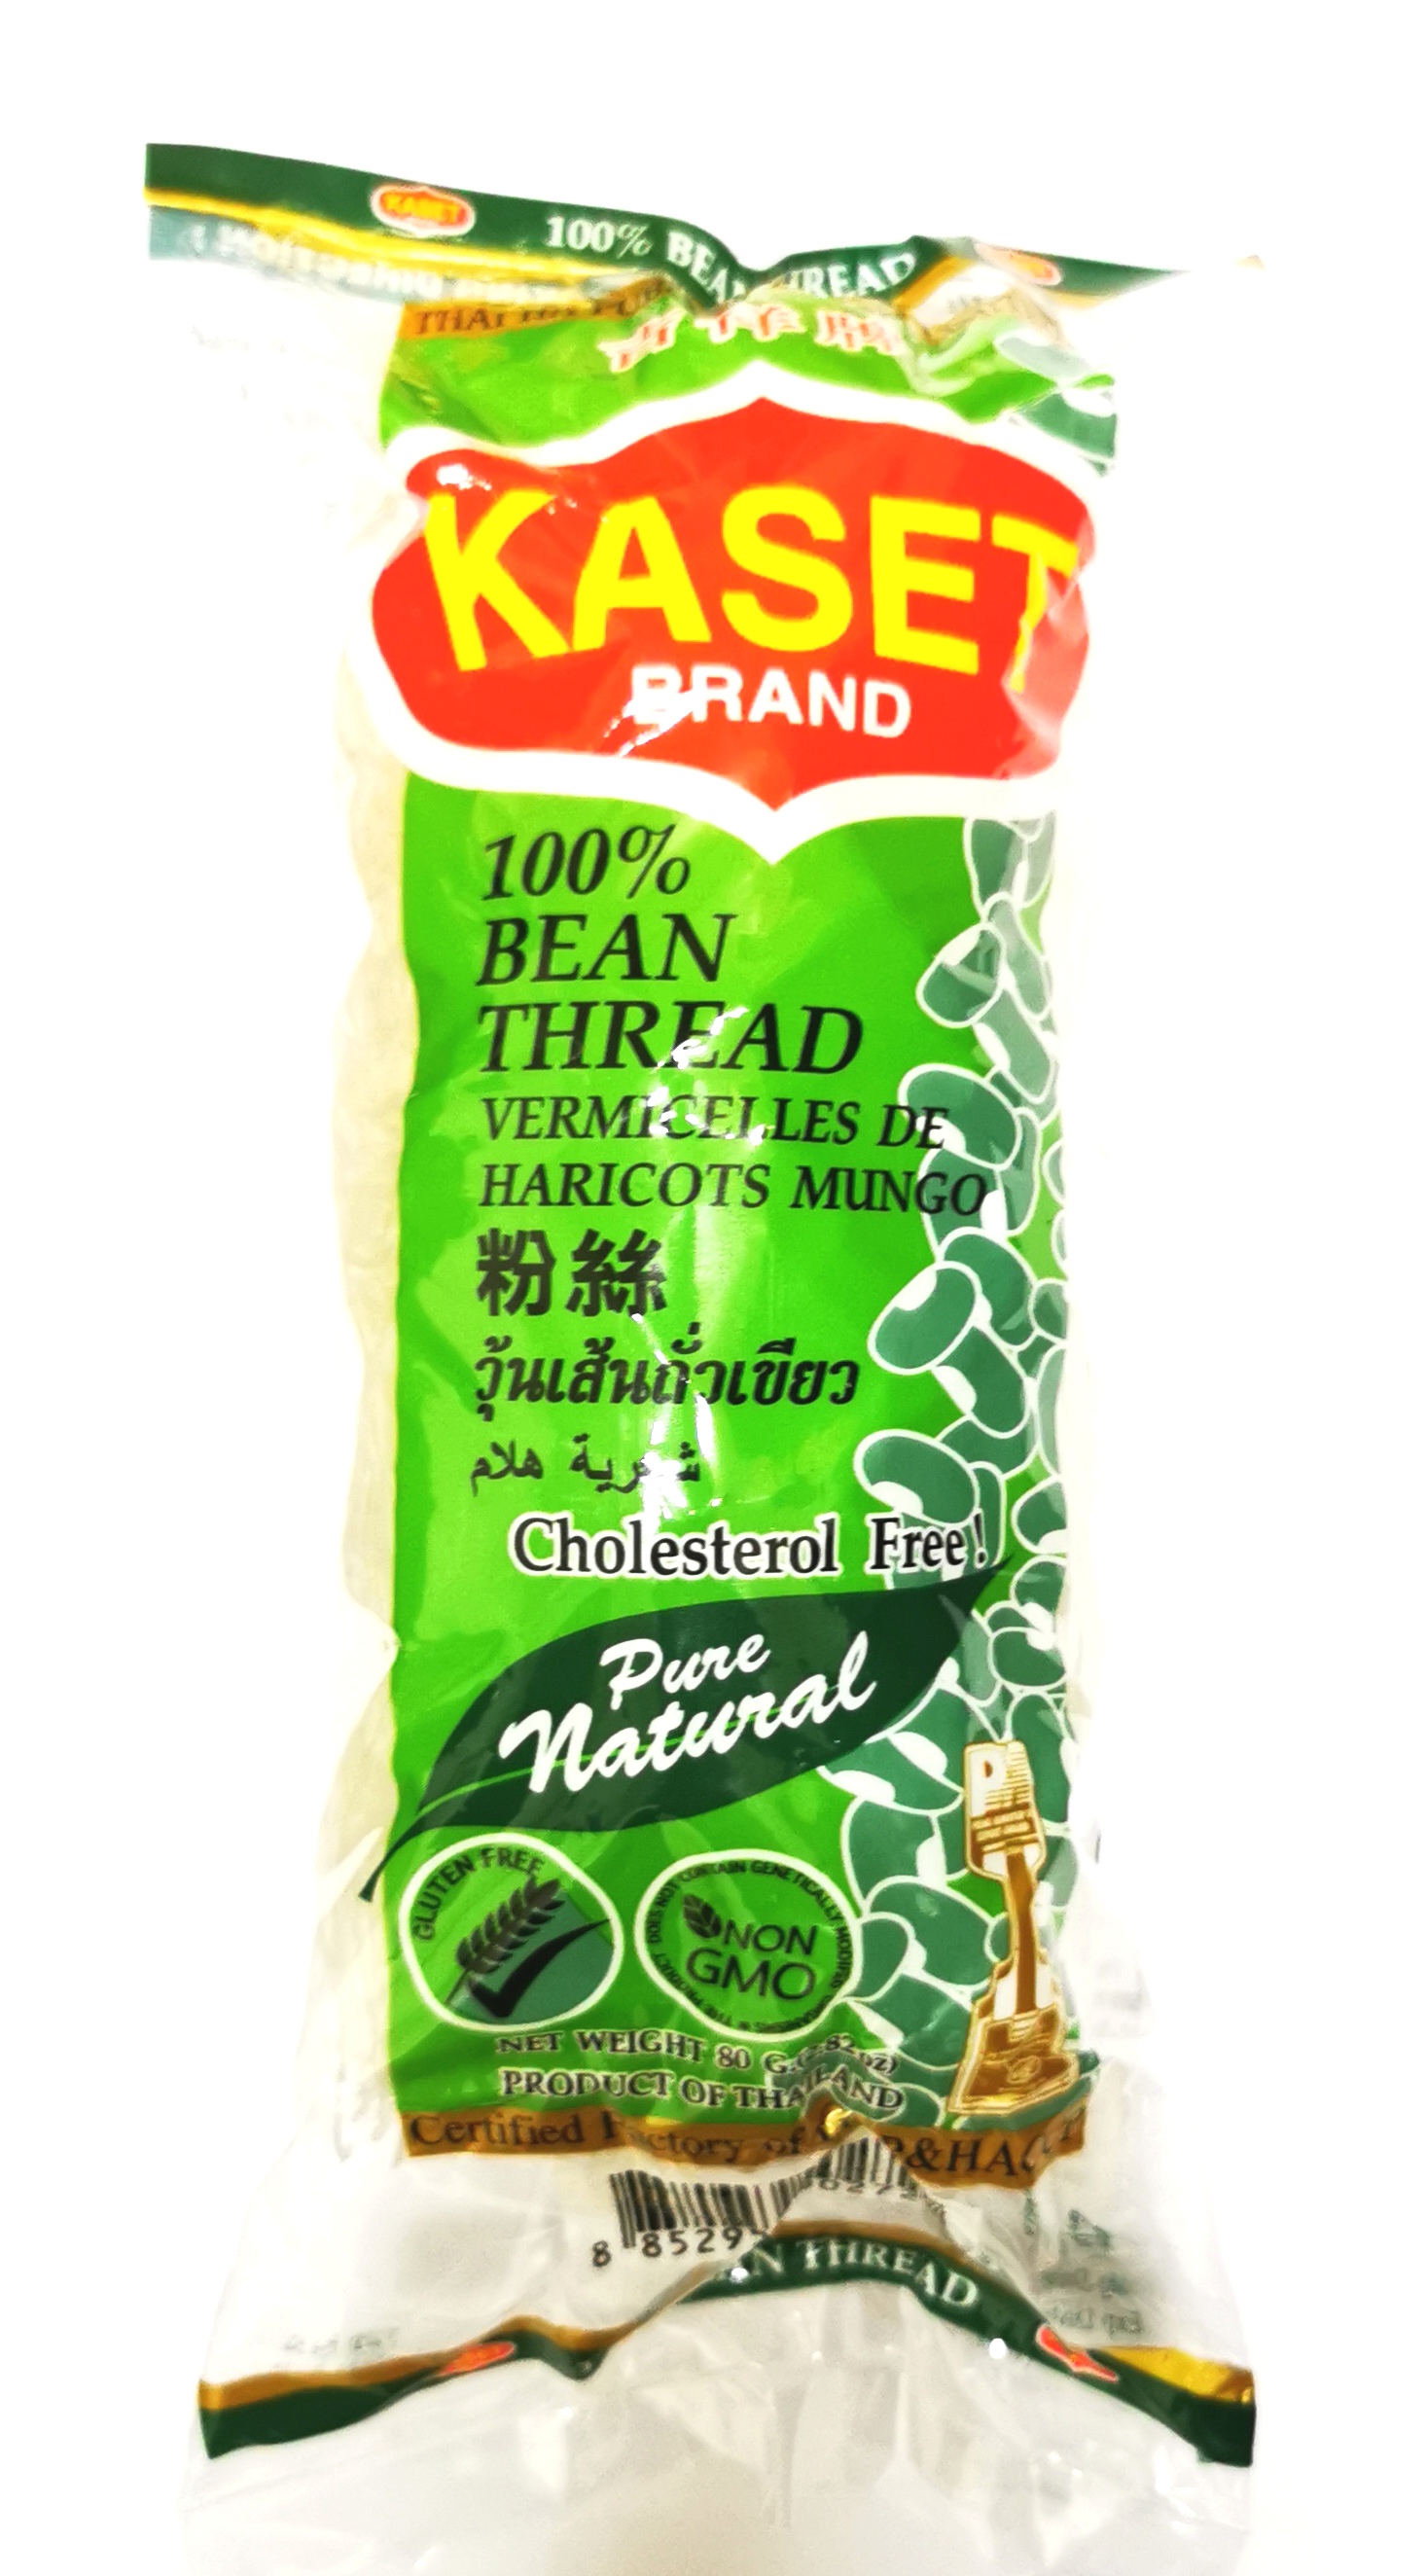 Kaset Brand Bean Thread 80g